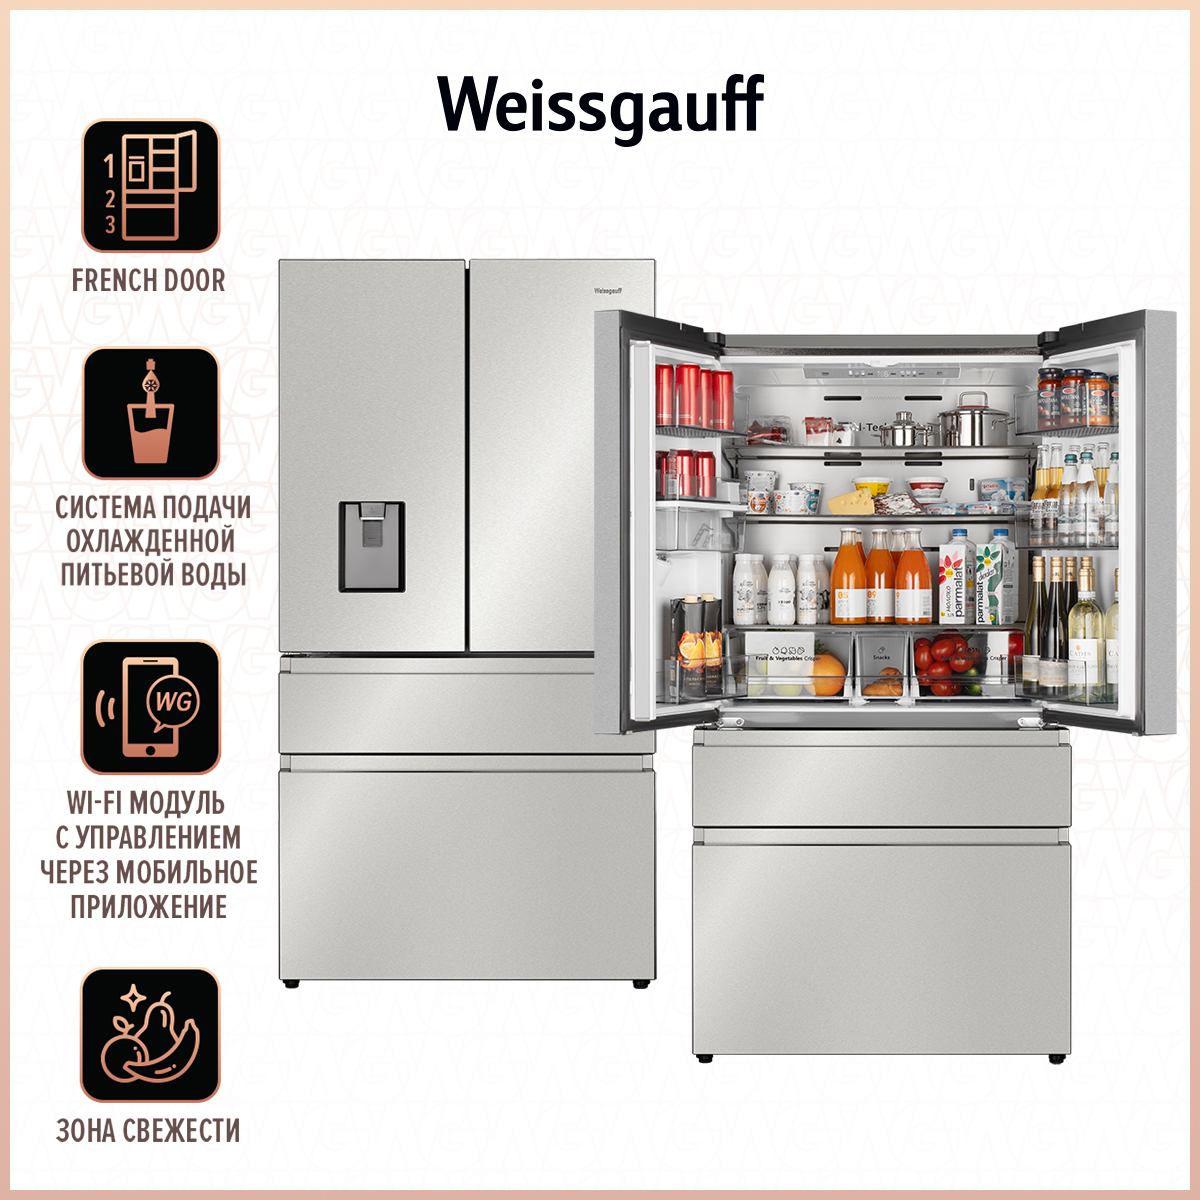 Холодильник Weissgauff WFD 585 черный двухкамерный холодильник weissgauff wrk 1970 dwg full nofrost inverter